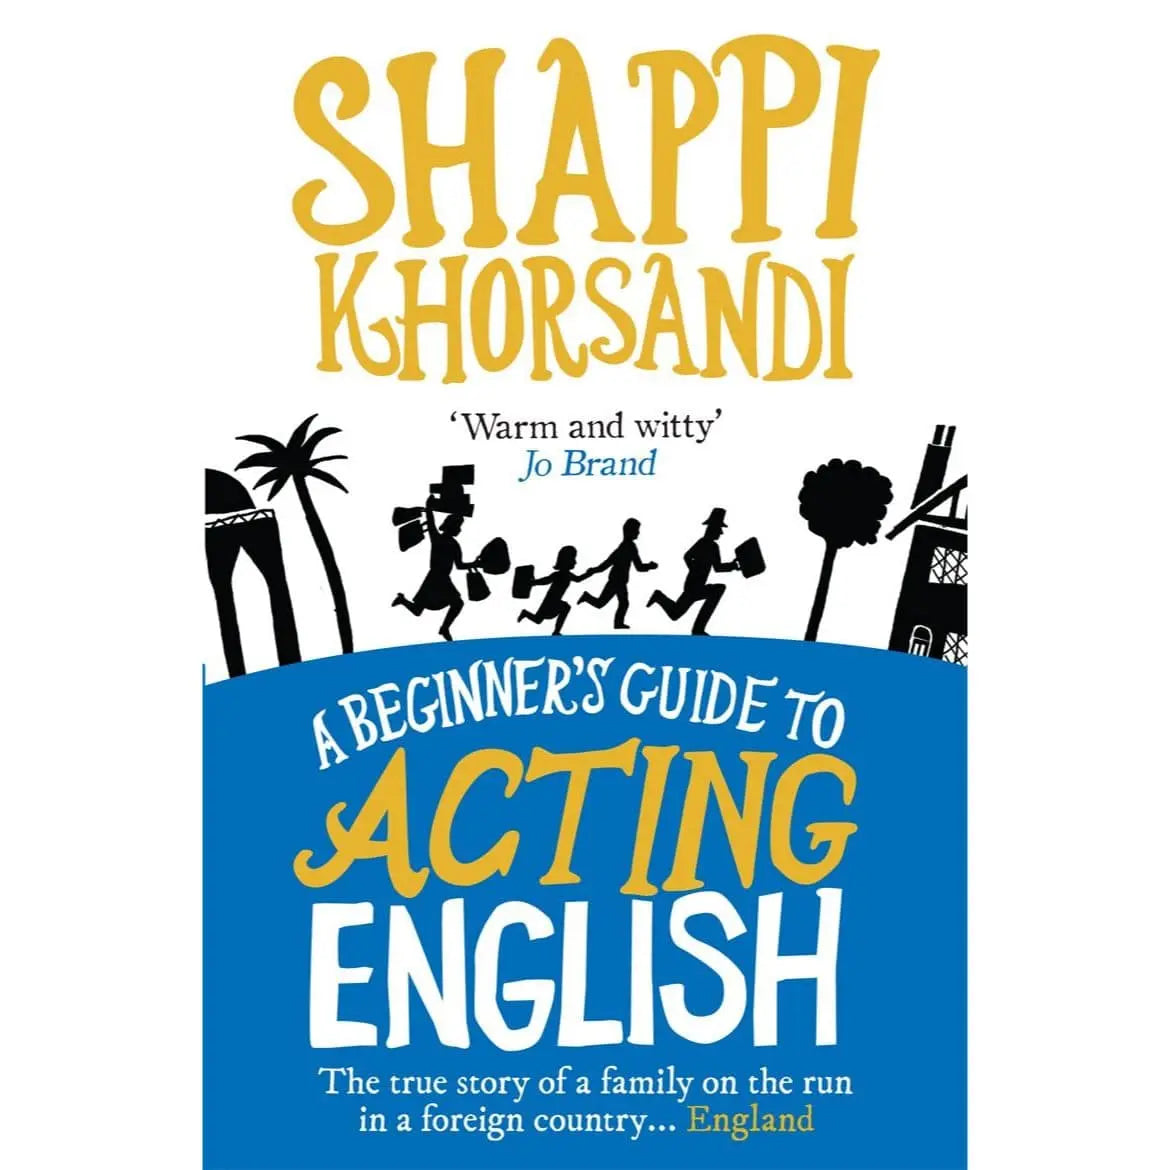 Shappi Khorsandi: A Beginner’s Guide to Acting English - Migration Museum Shop